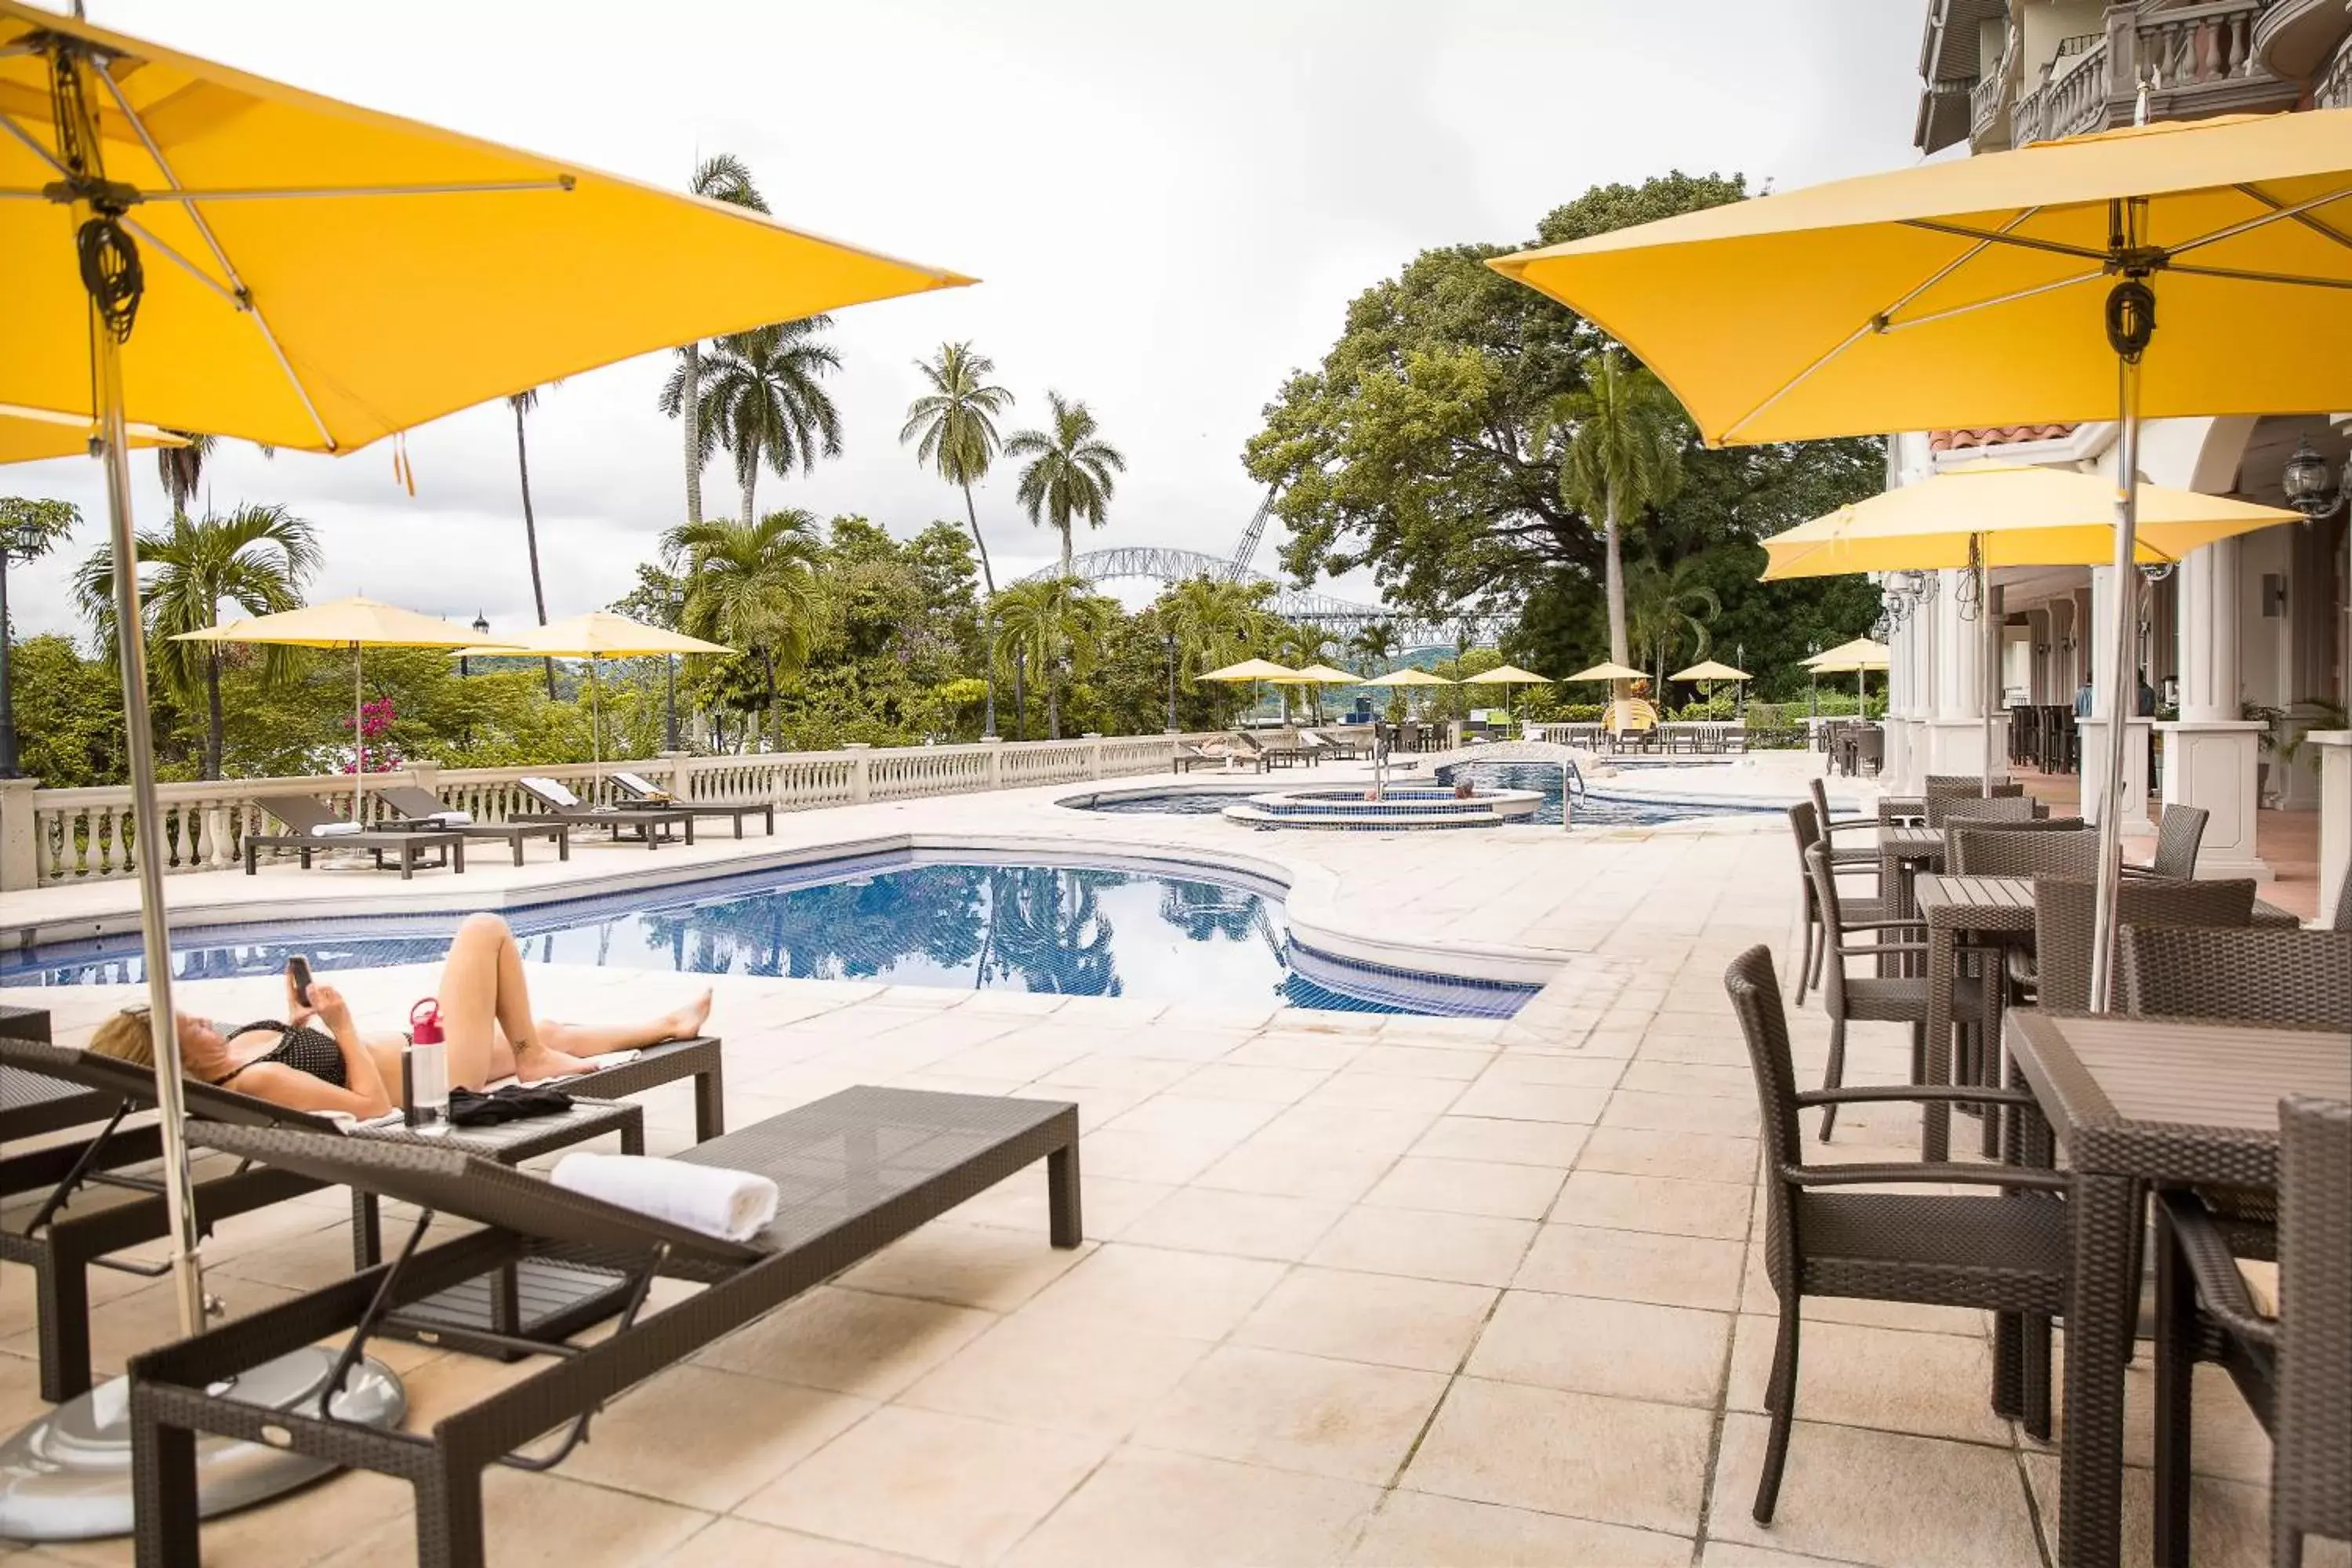 Swimming Pool in Radisson Hotel Panama Canal